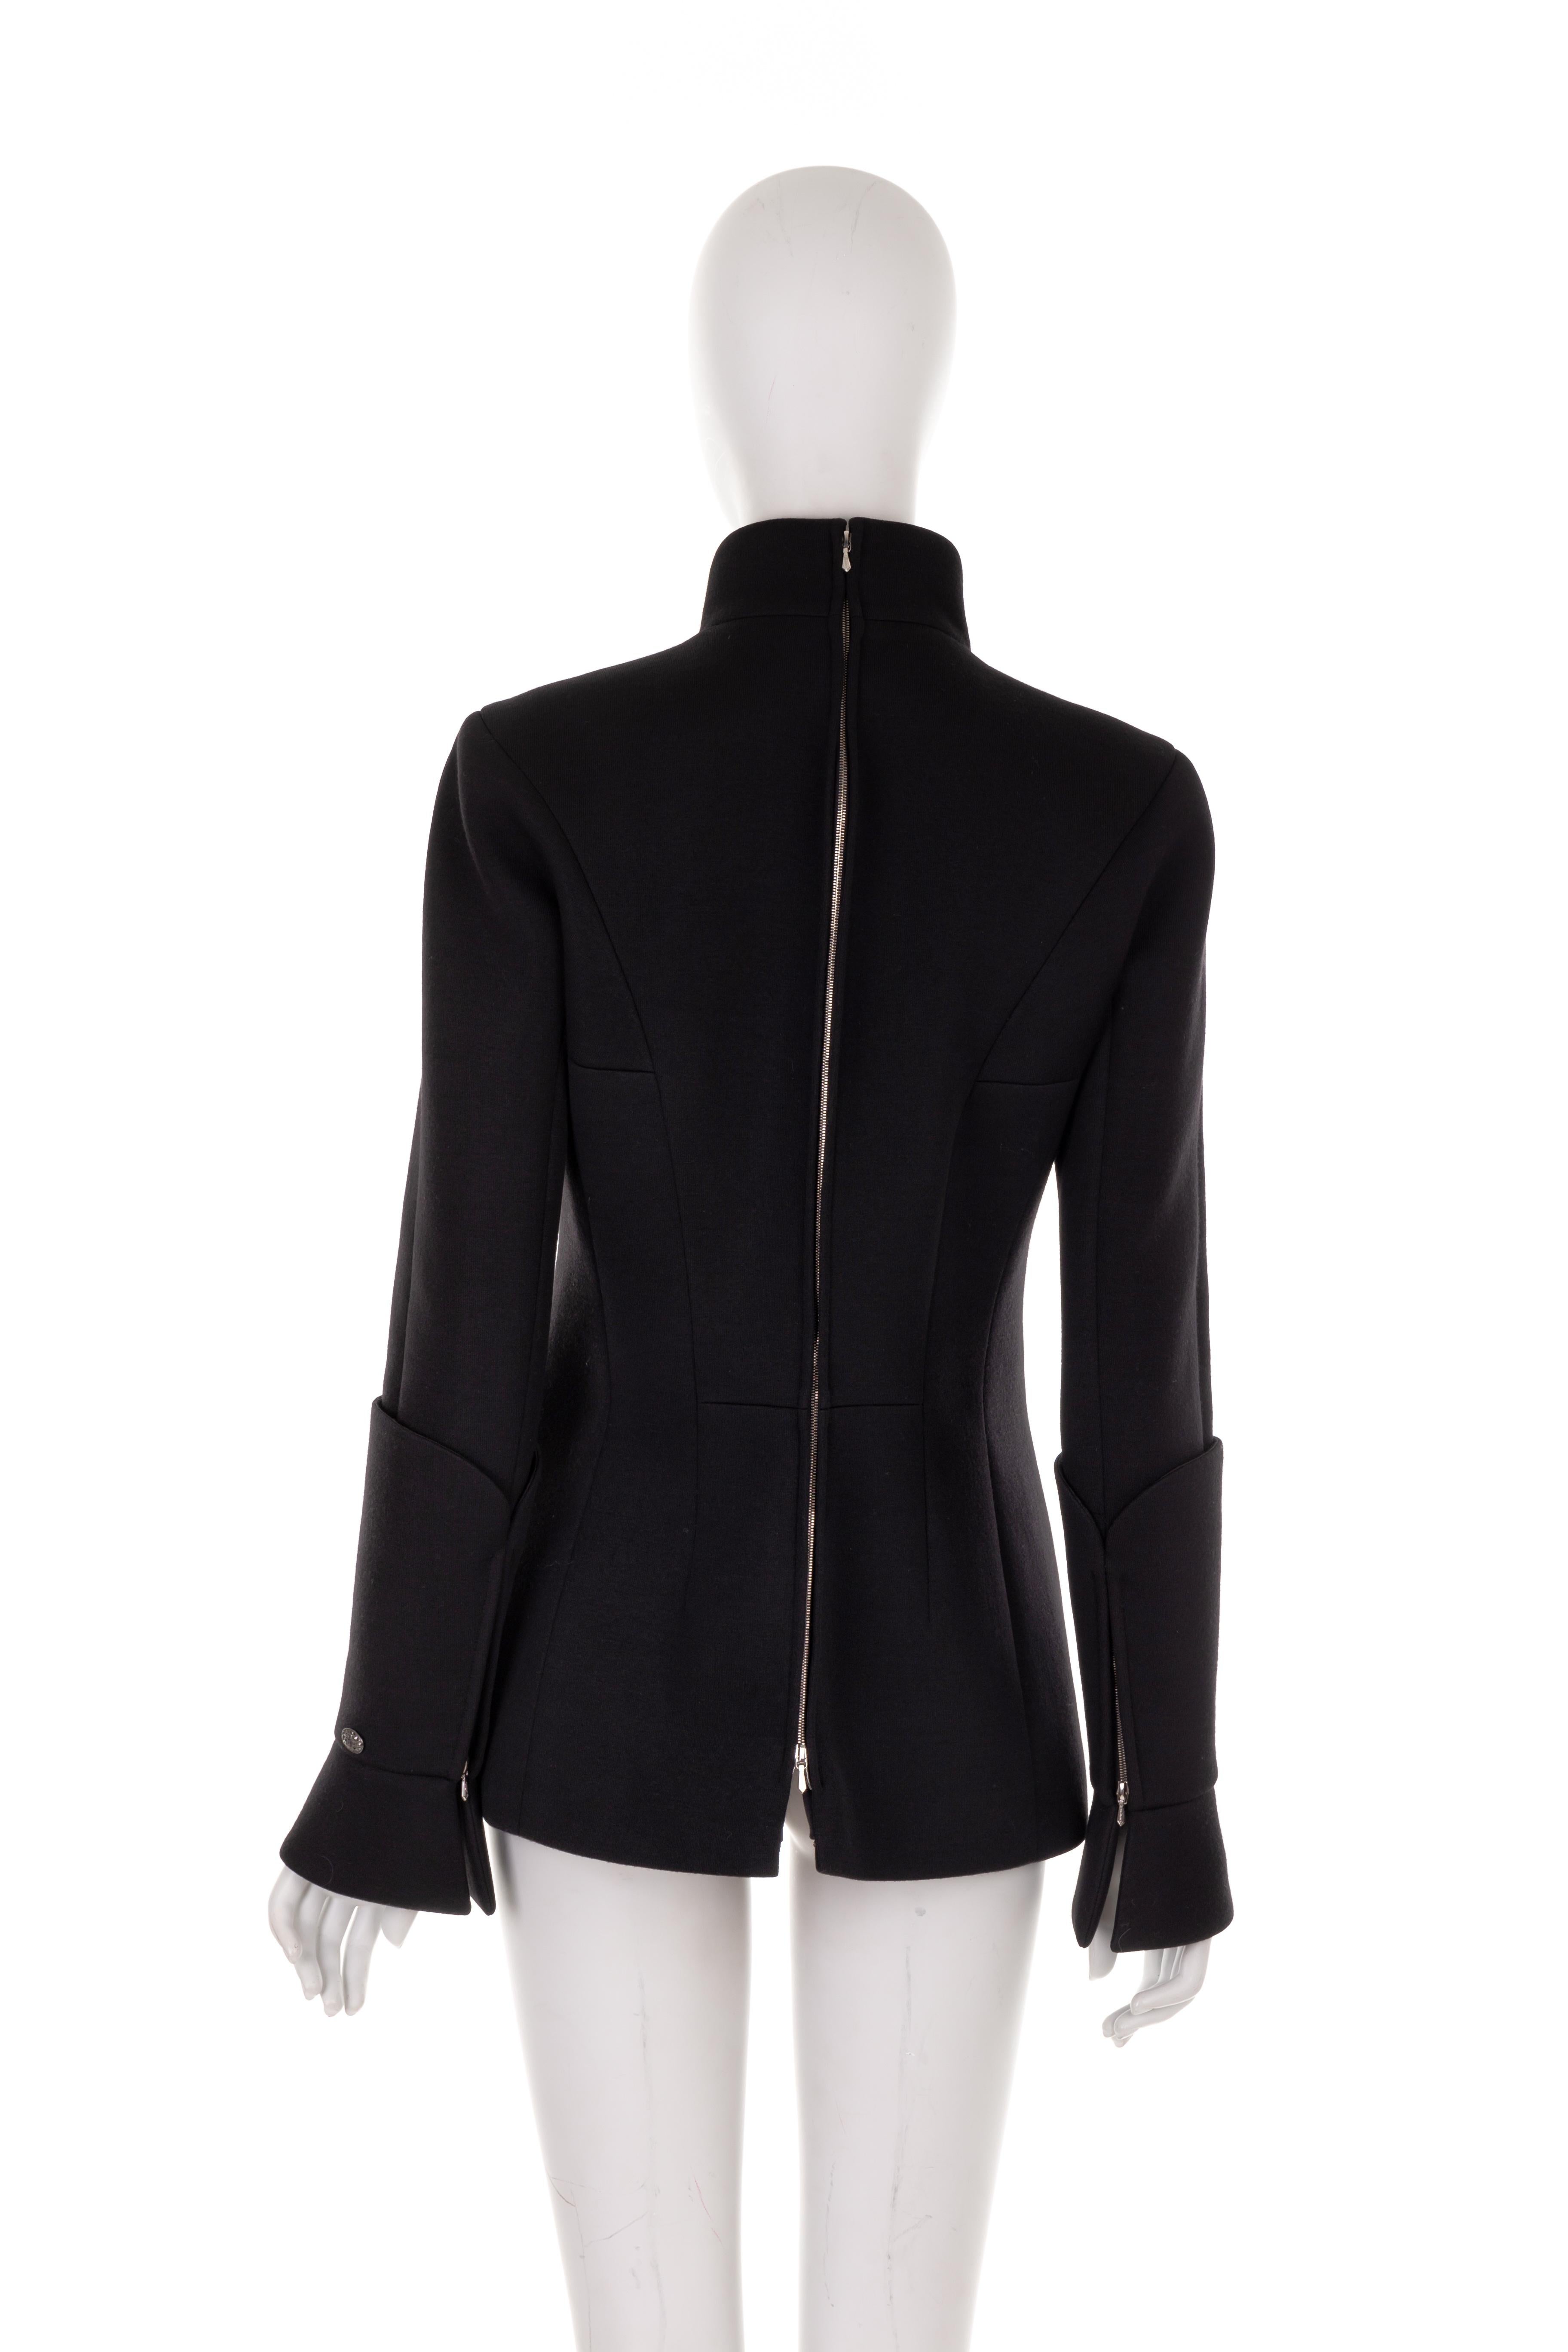 Chanel by Karl Lagerfeld F/W 2009 black wool/nylon paneled jacket For Sale 1